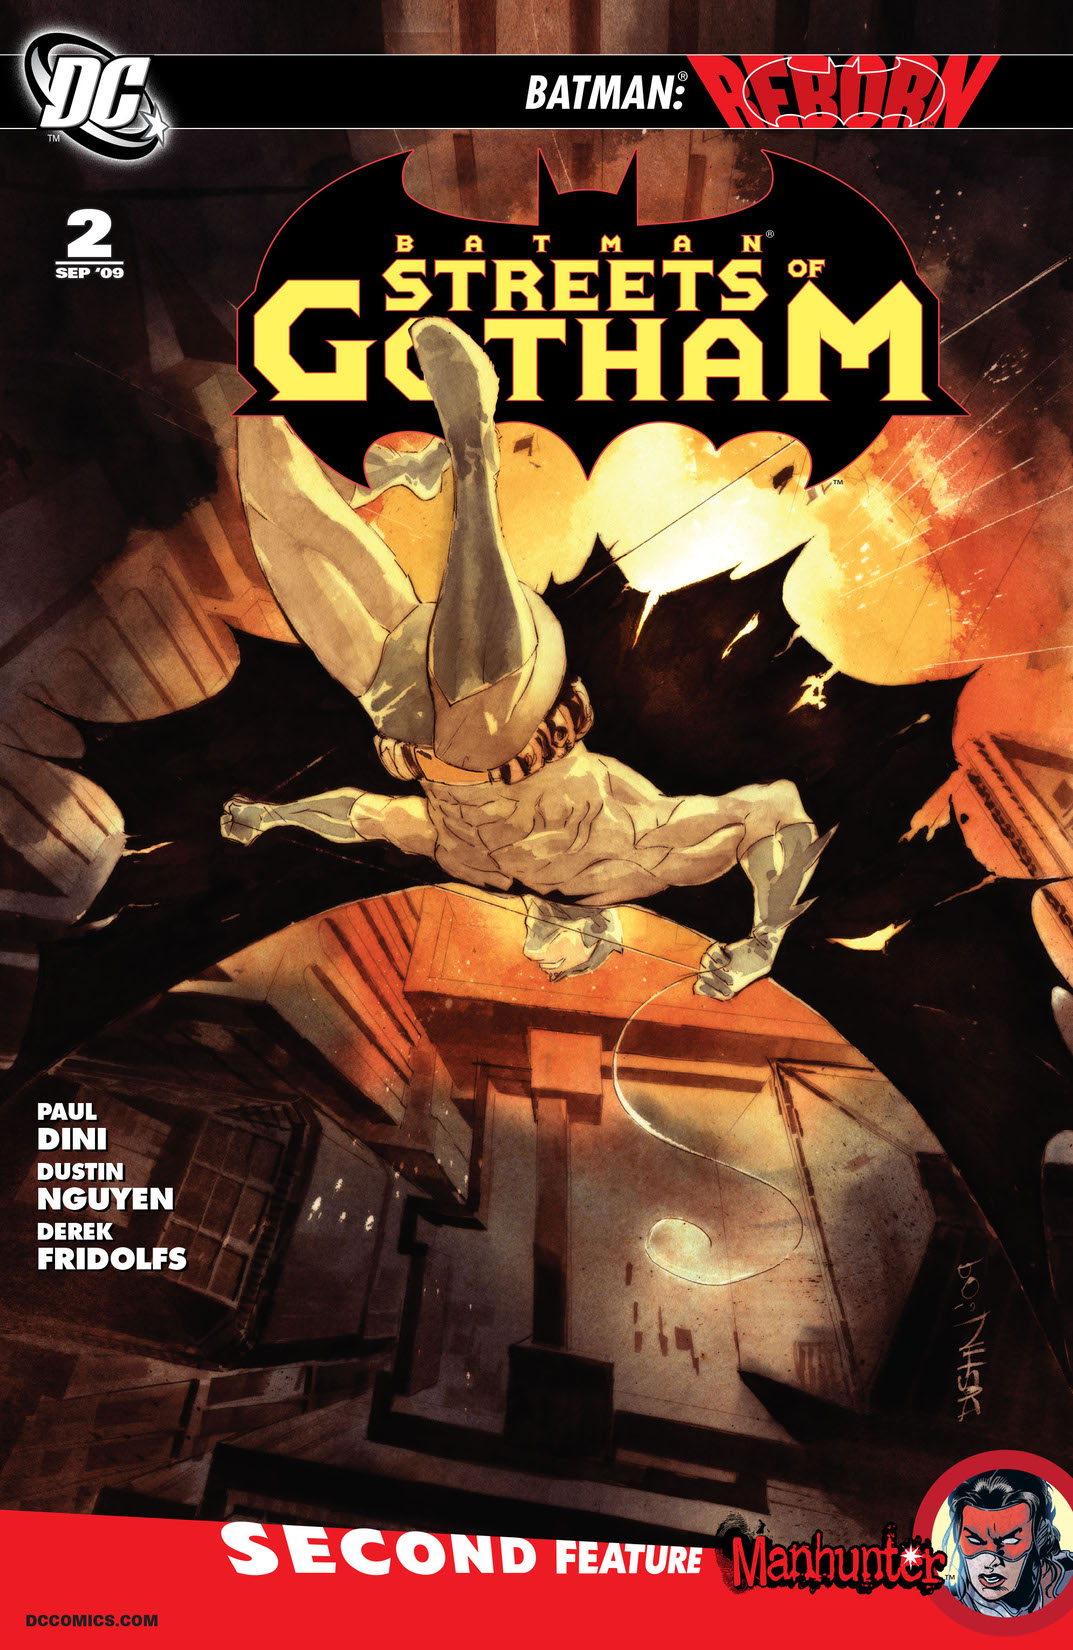 Batman: Streets of Gotham #2 preview images